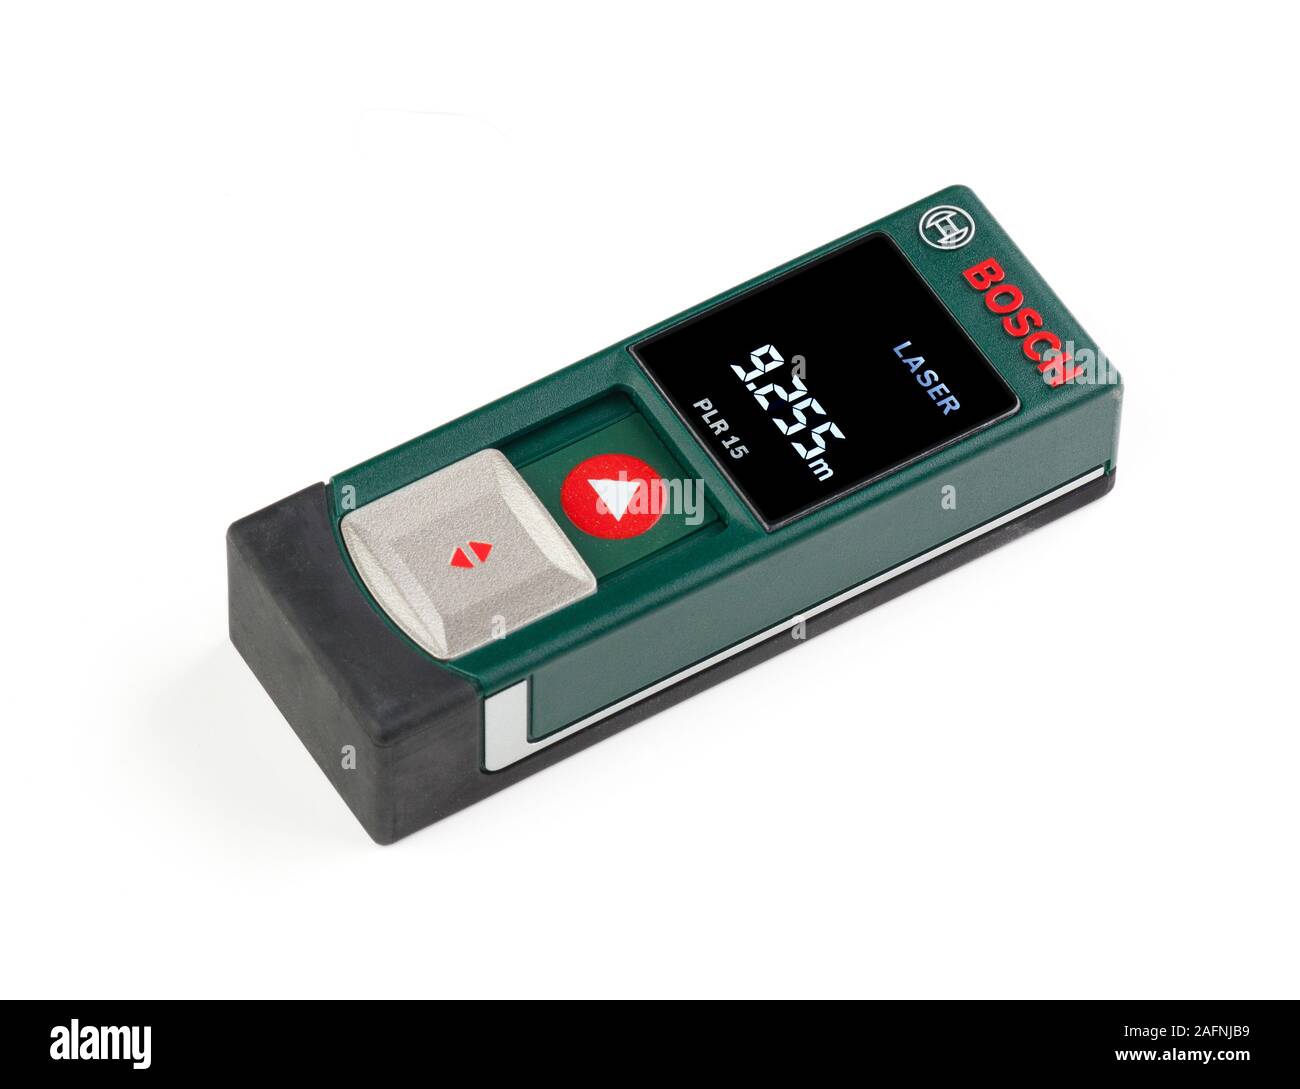 Bosch laser distance measure tool Stock Photo